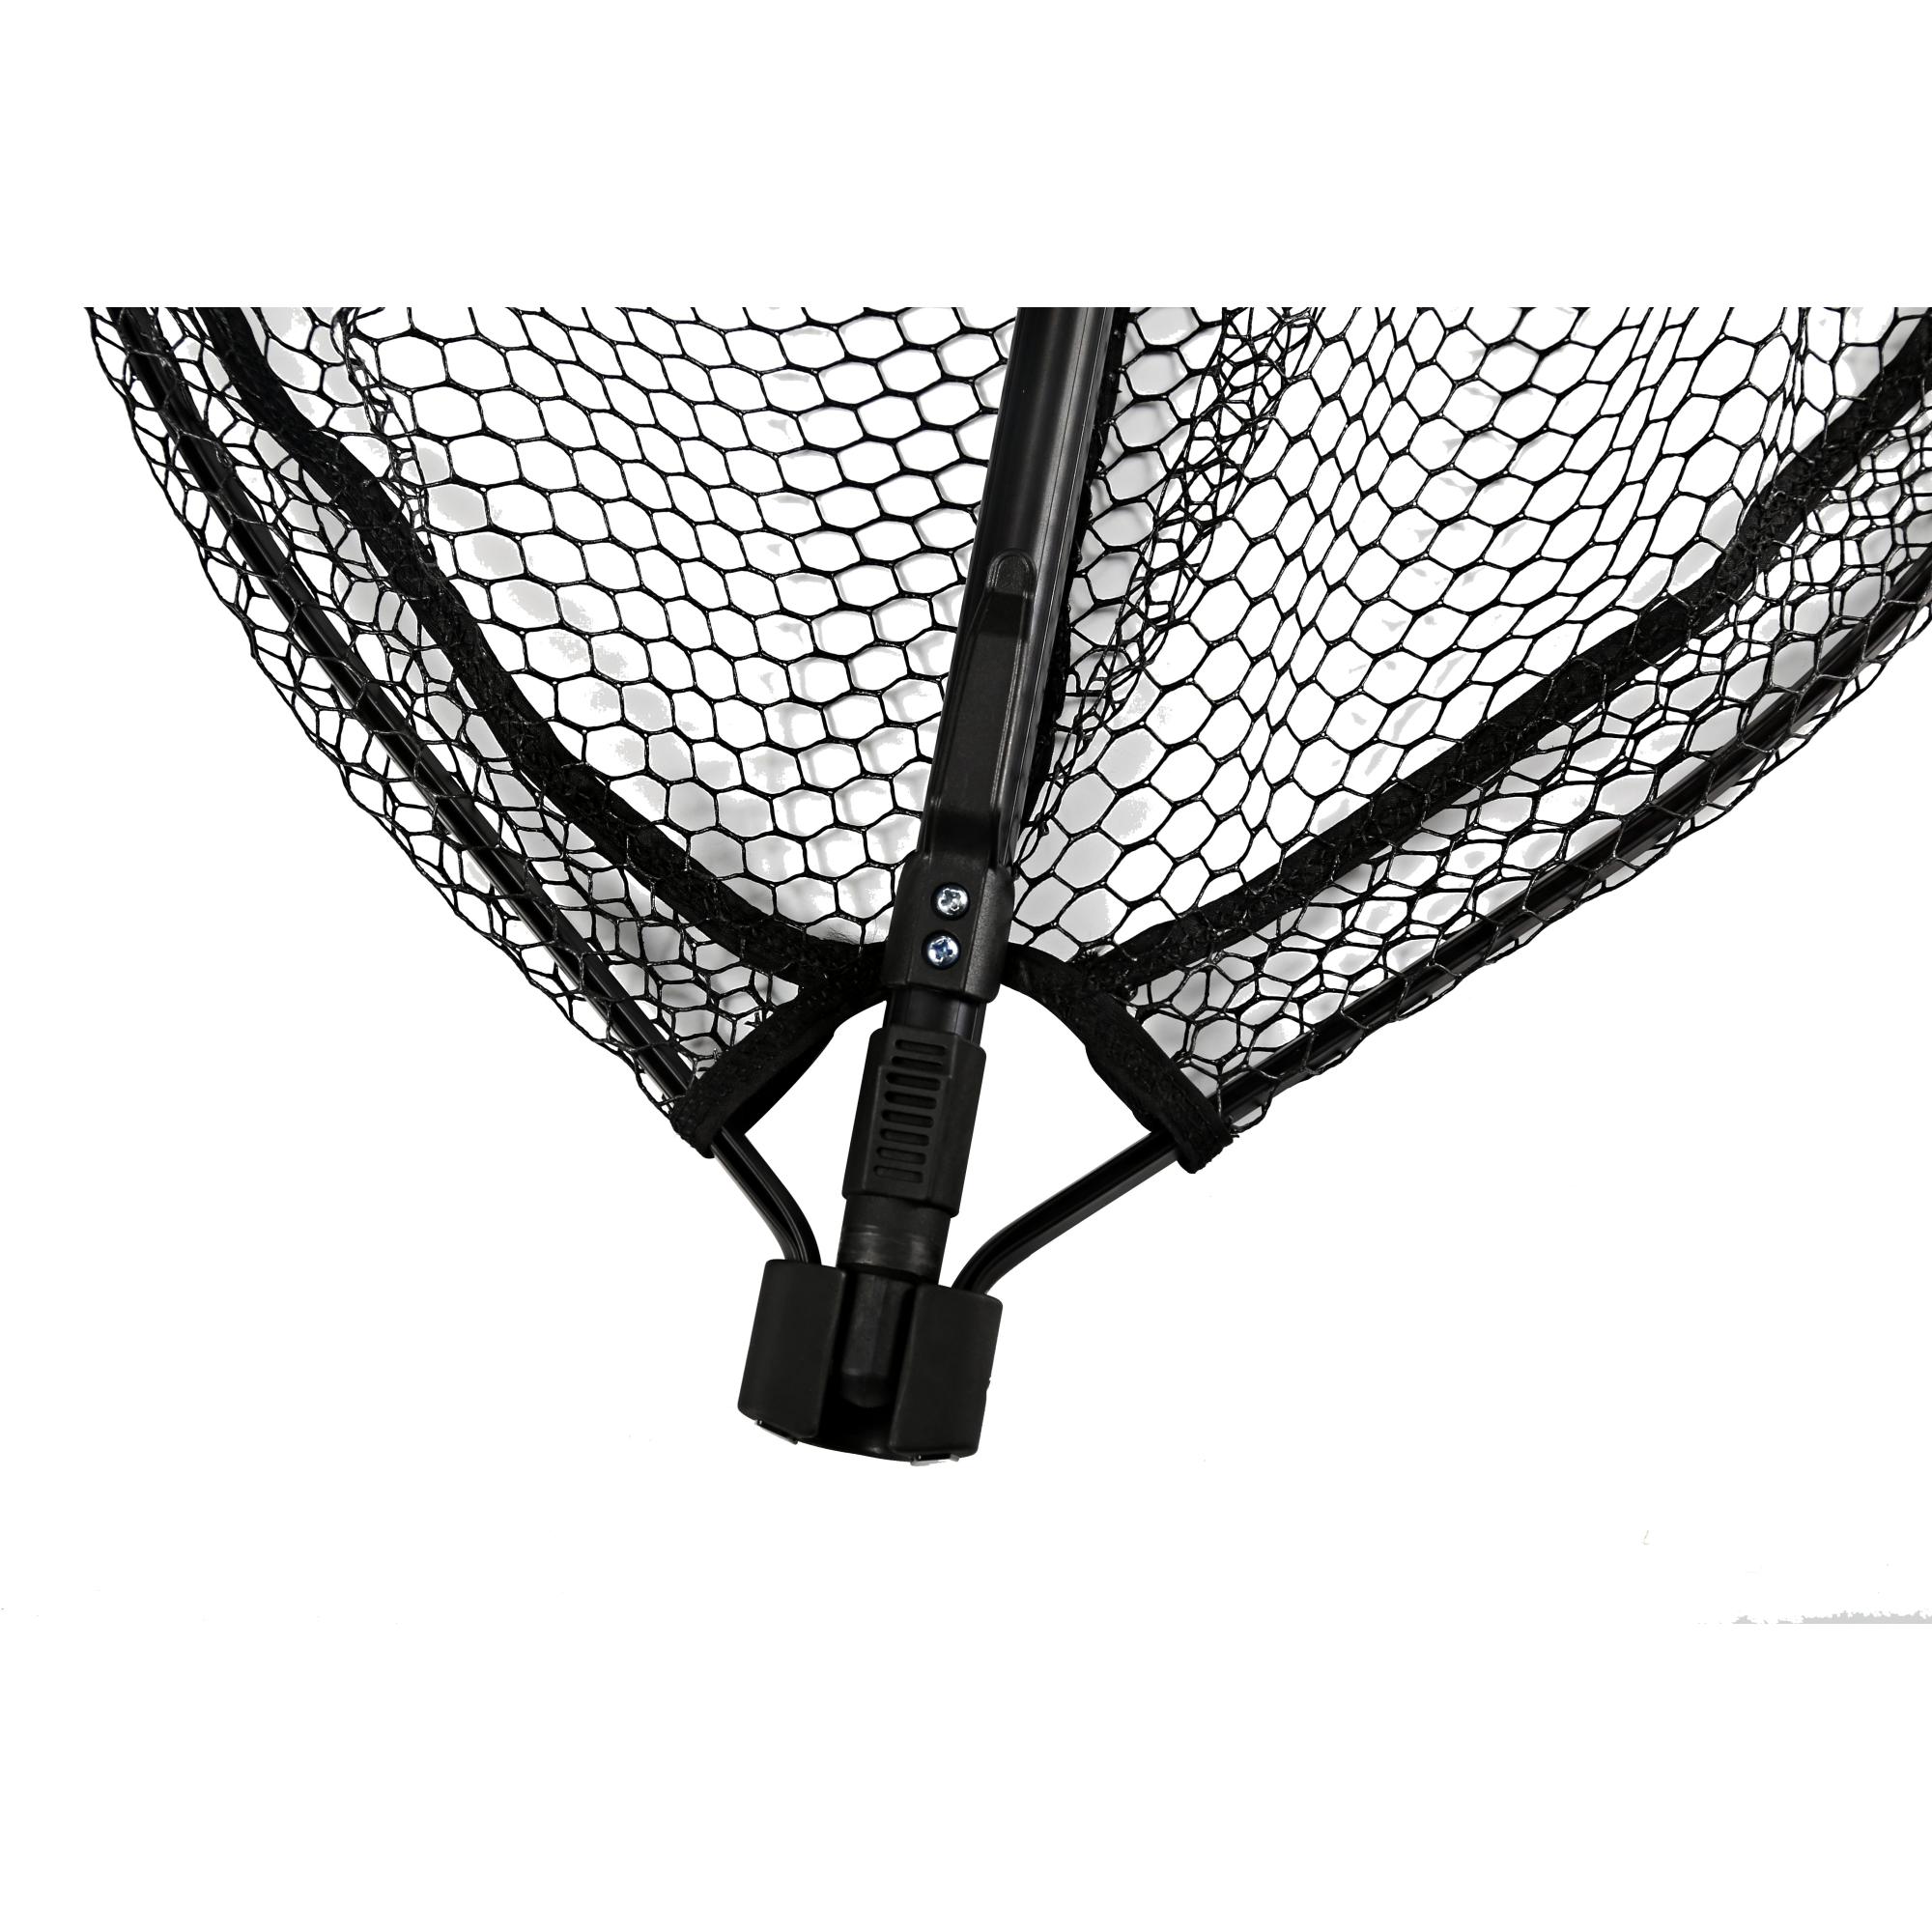 Paladin Black Net 2 210cm